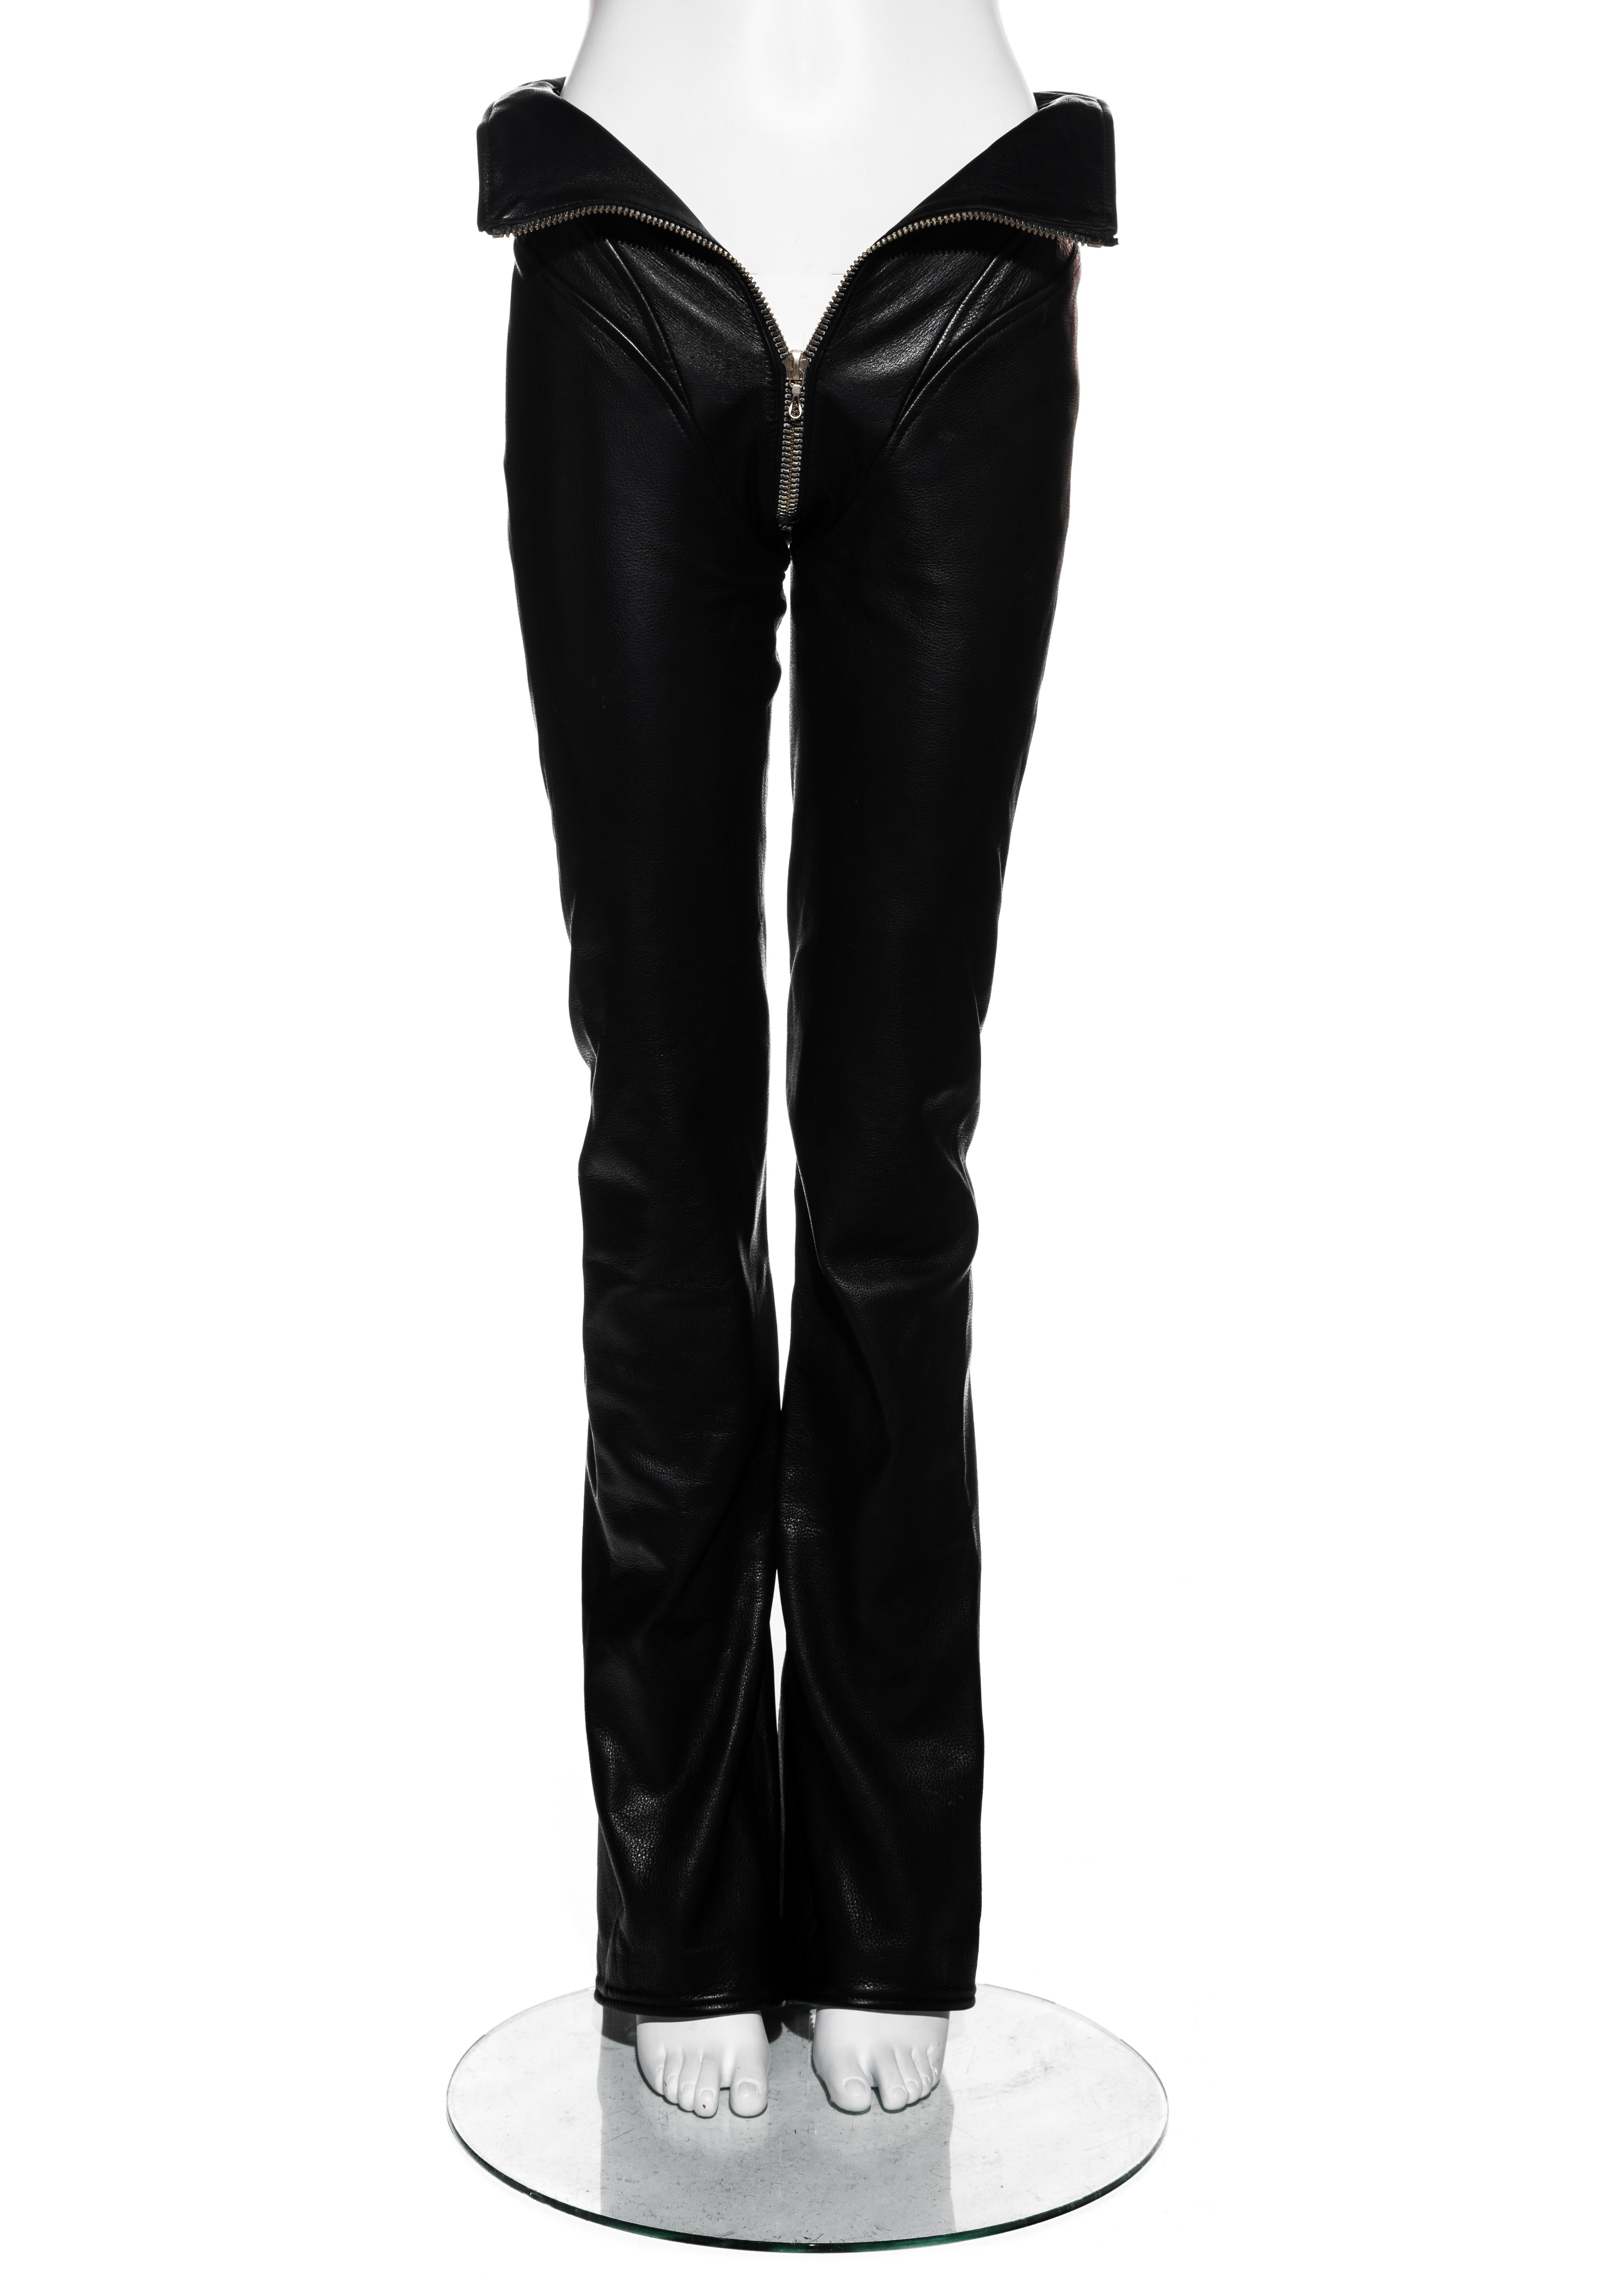 ▪ Schwarze Lederhose von Vivienne Westwood 
▪ 100% Leder
▪ Metall-Reißverschluss im Schritt 
▪ Hochgeschlossenes Taillenkorsett 
▪ Reißverschlüsse am hinteren Bein
▪ FR 38 - UK 10 - US 6
▪ Herbst-Winter 1997